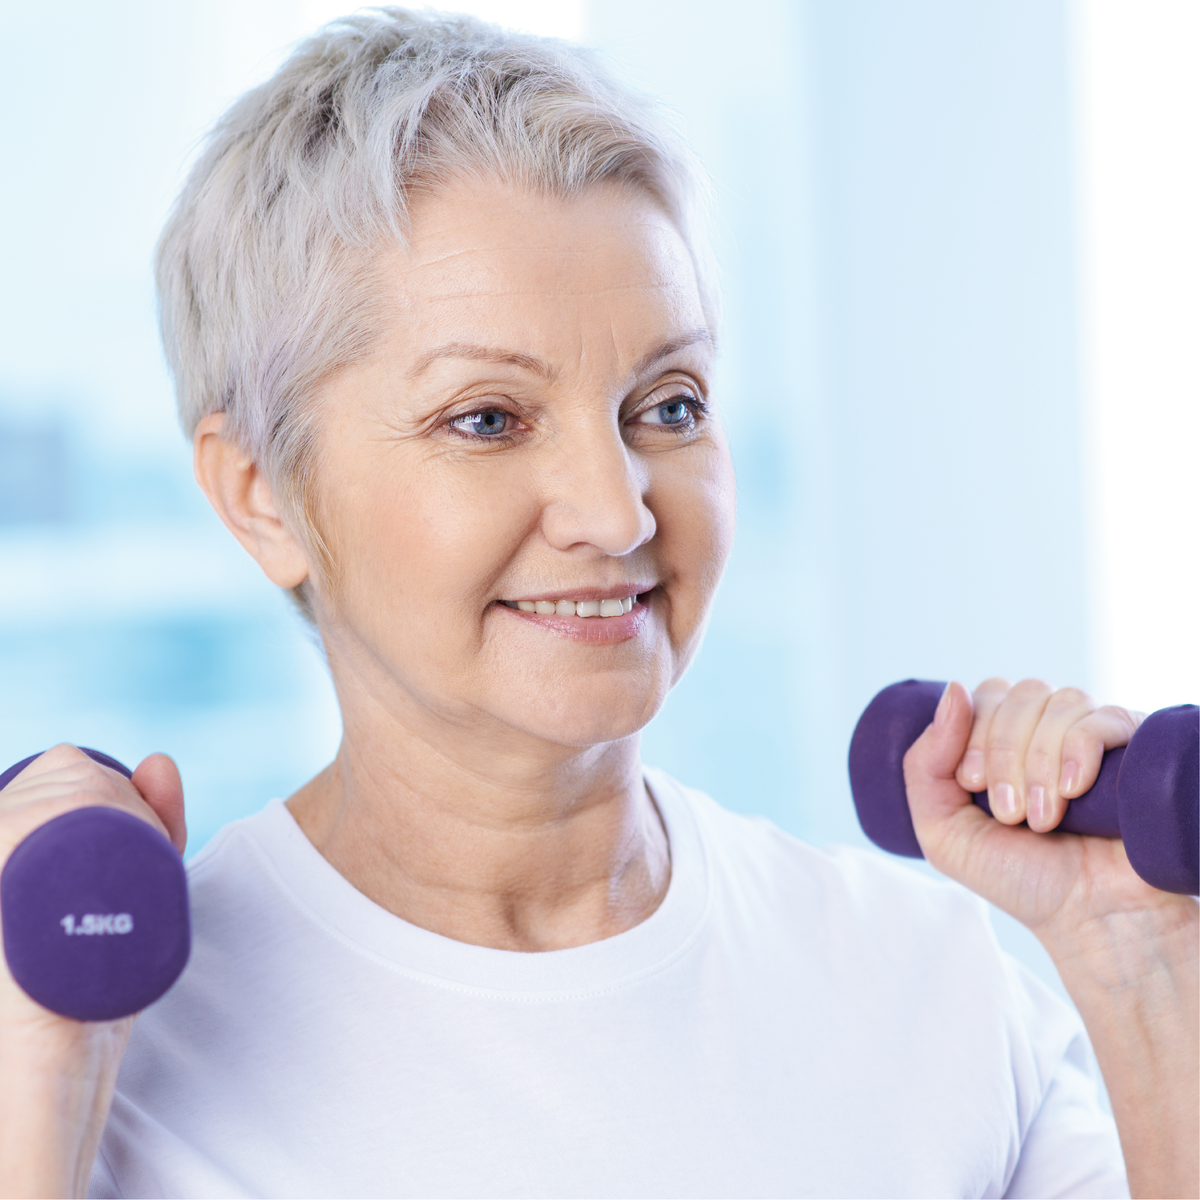 An elderly woman lifting purple weights